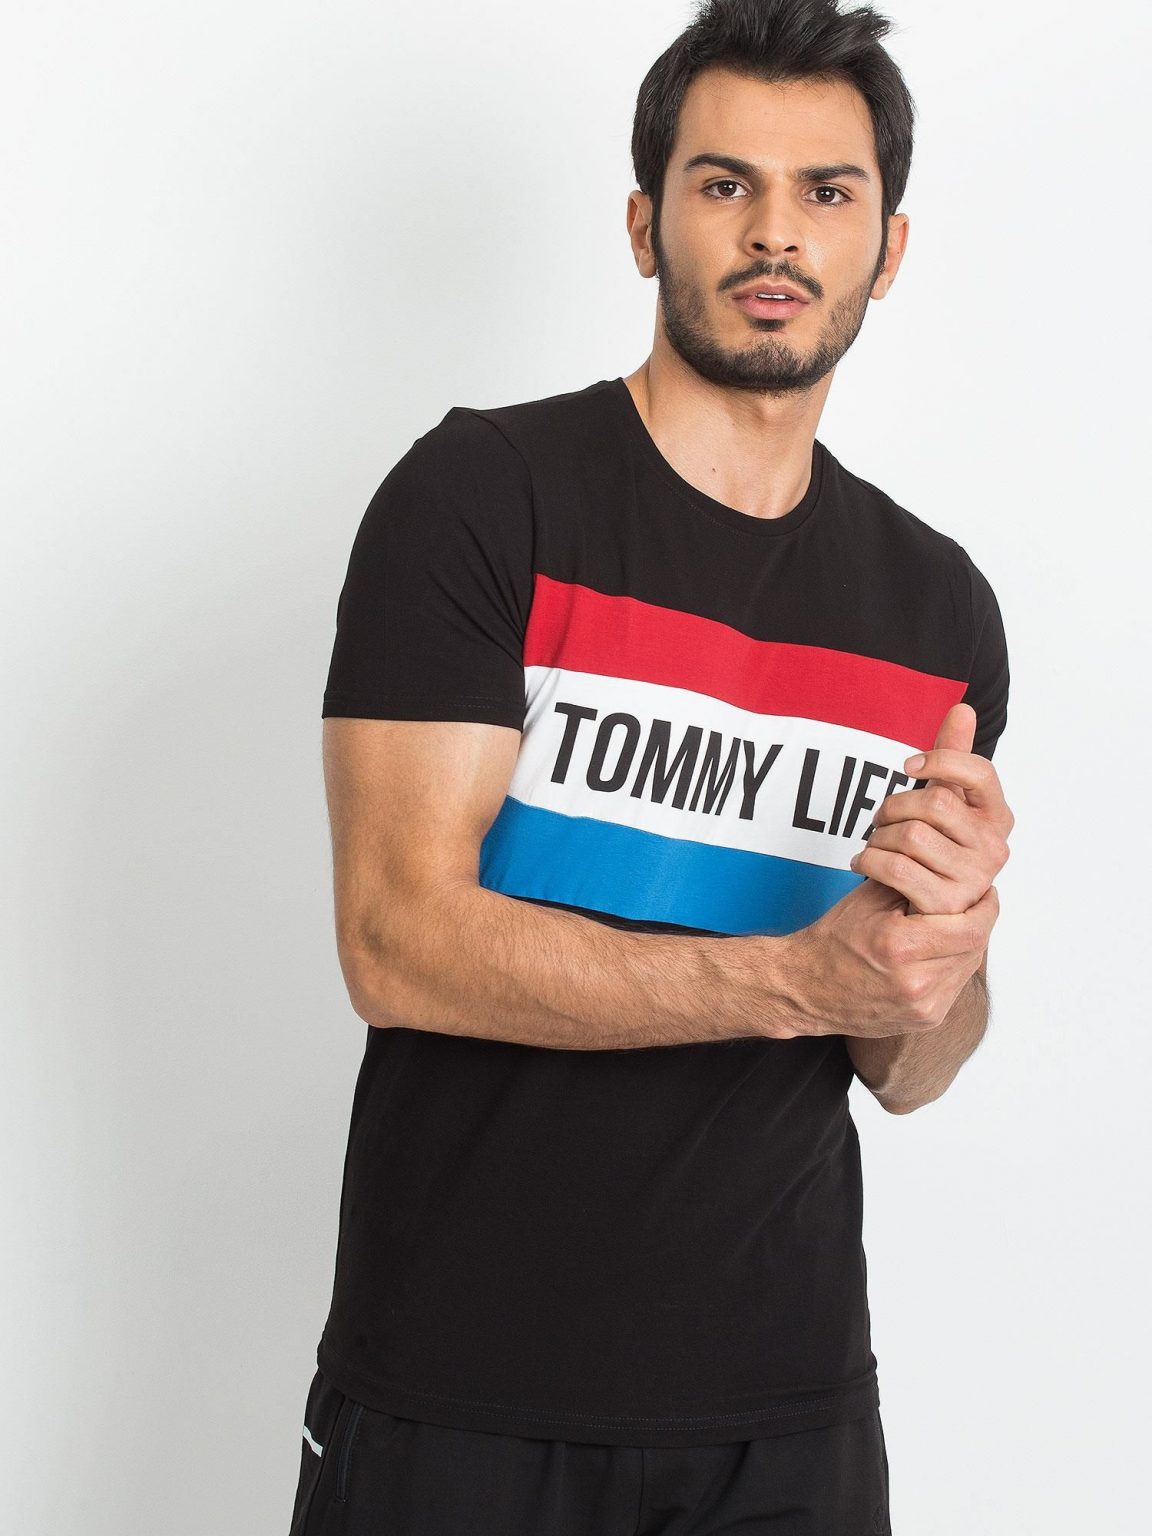 TOMMY LIFE Czarna koszulka męska